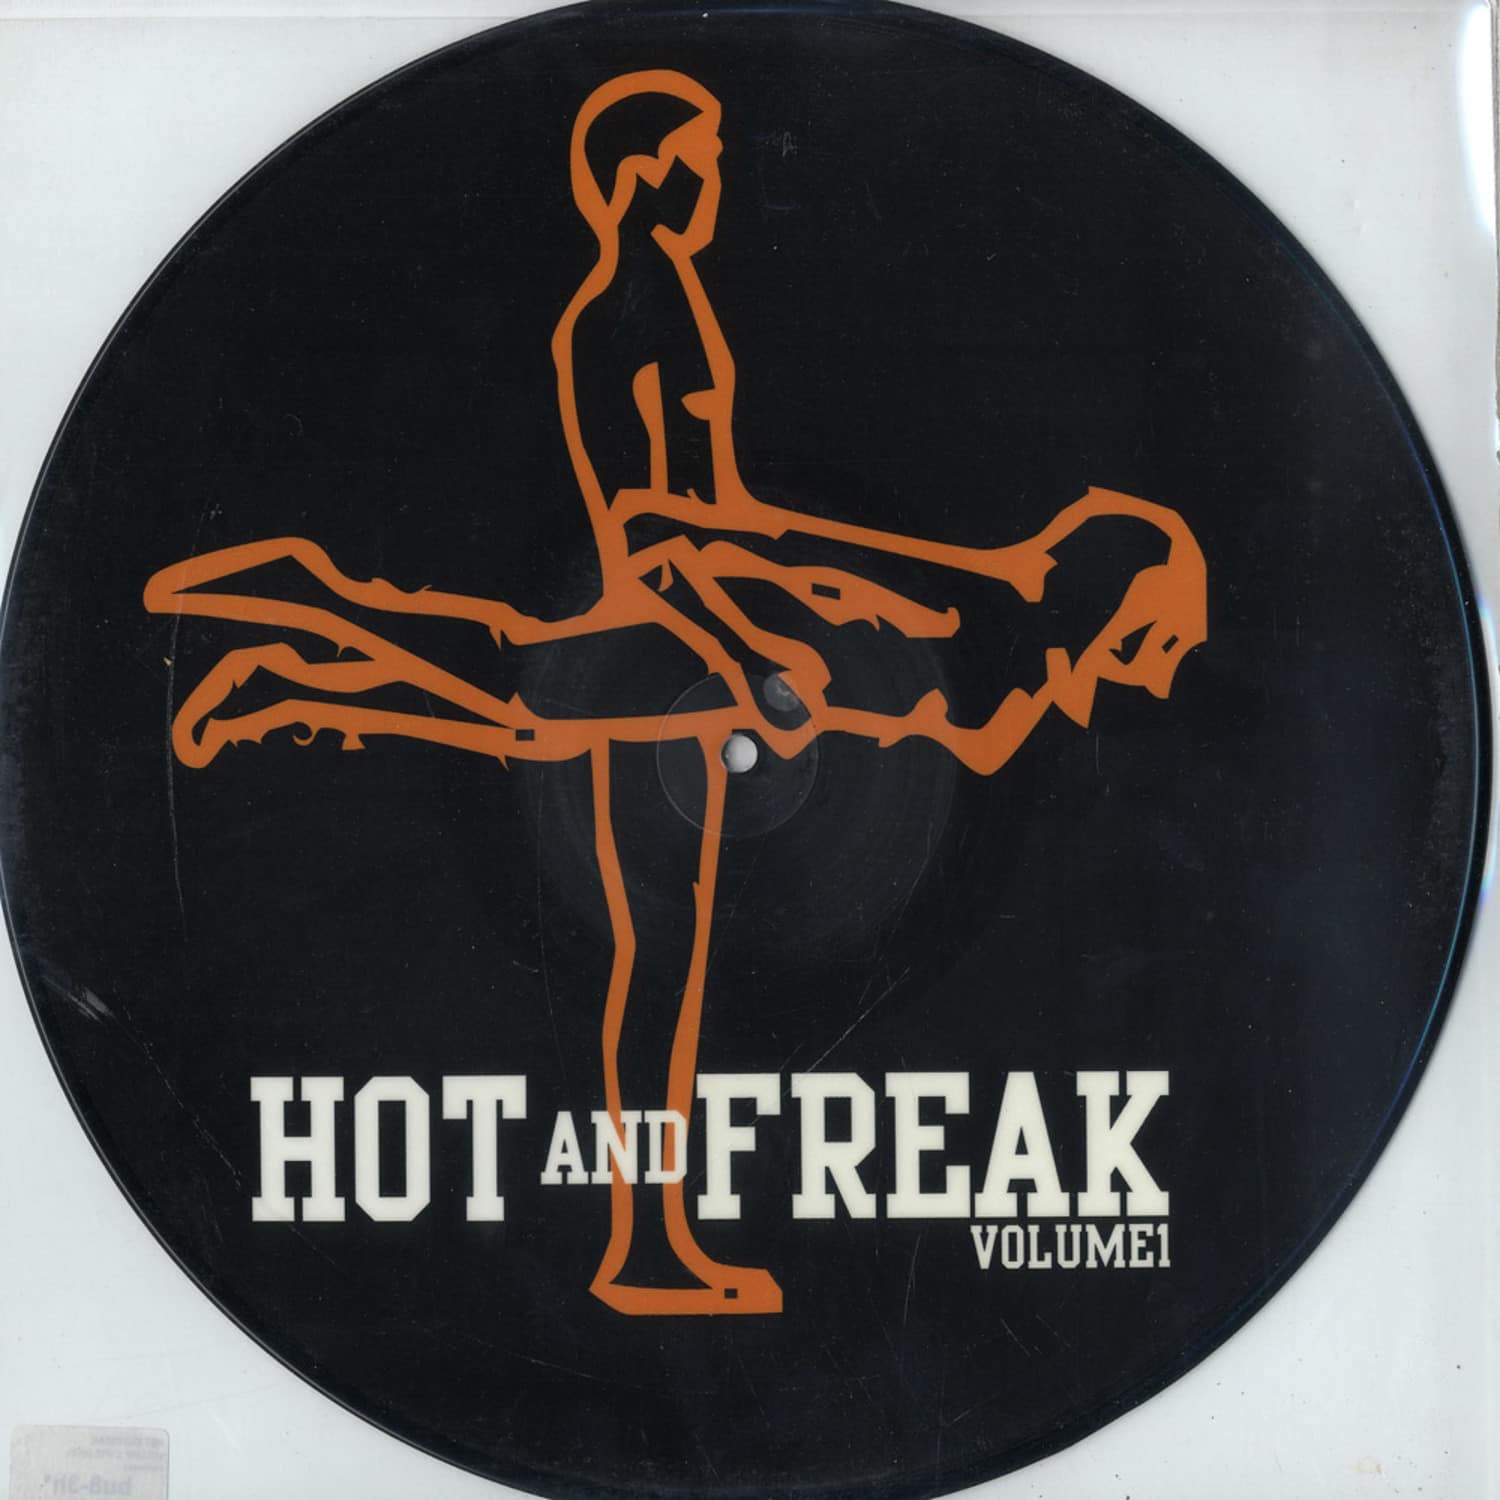 Hot and Freak - VOLUME 1 